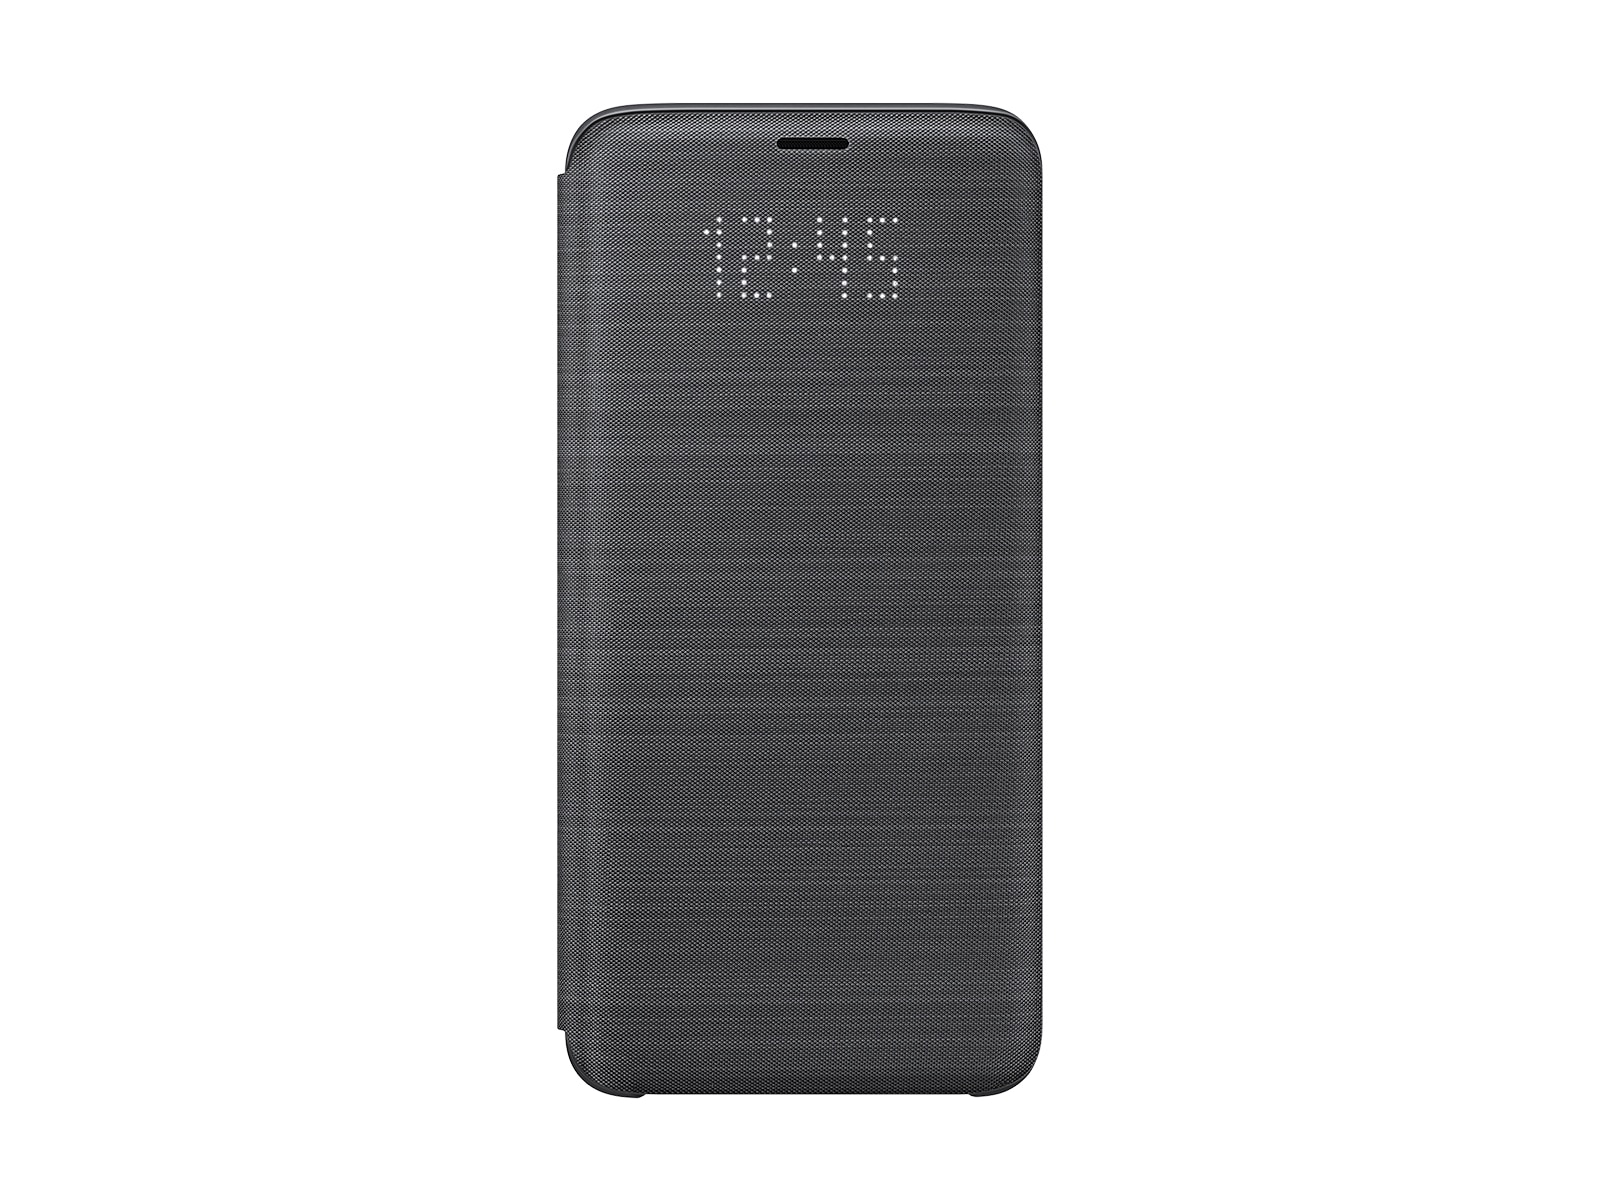 worstelen Wiens Kast Galaxy S9+ LED Wallet Cover, Black Mobile Accessories - EF-NG965PBEGUS |  Samsung US